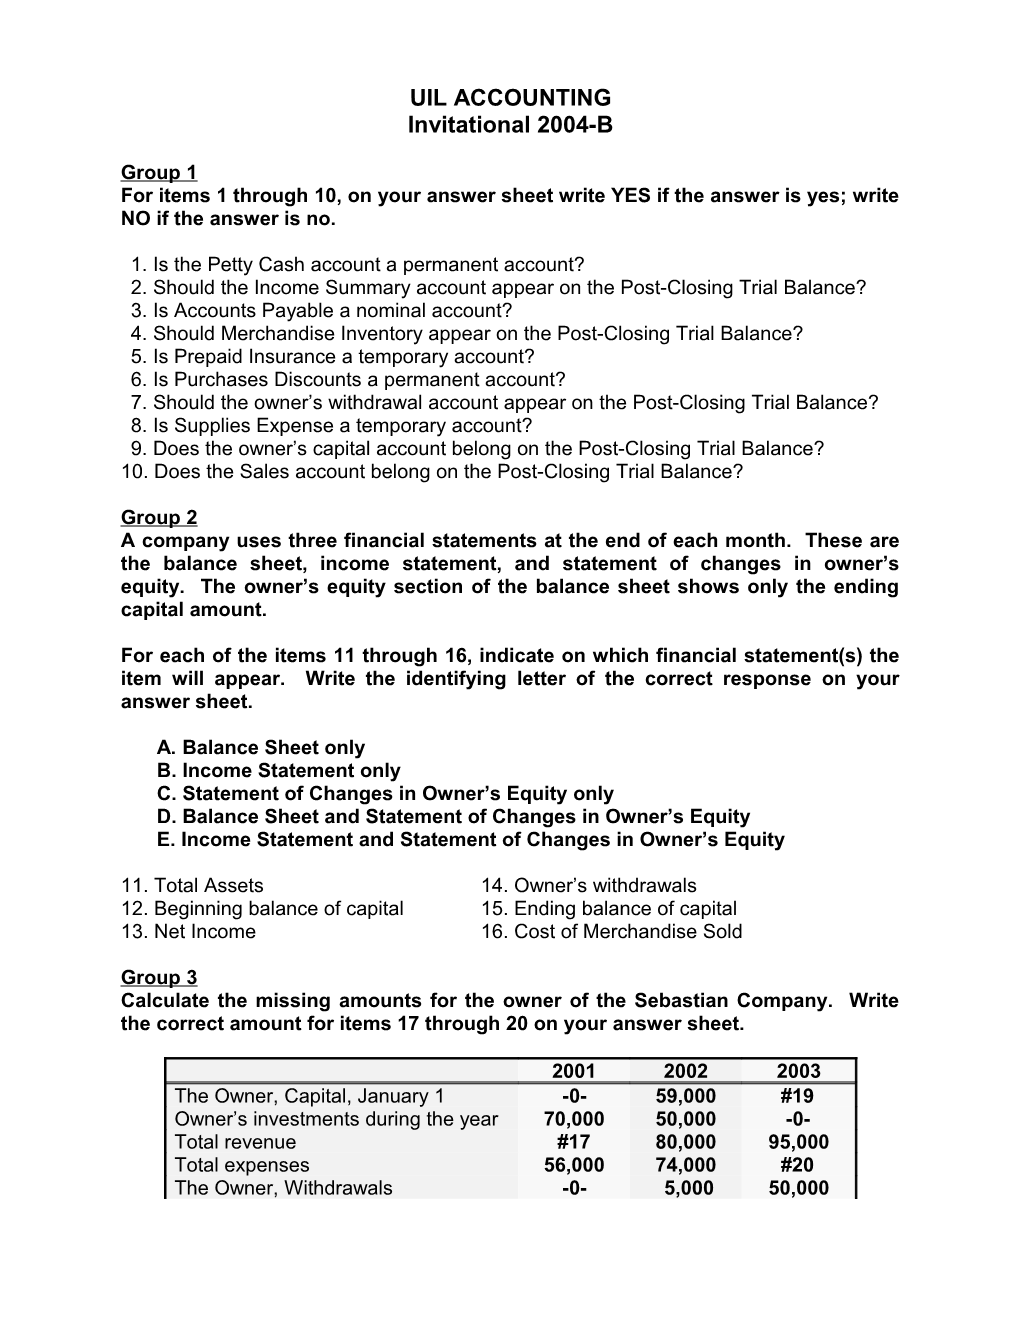 UIL Accounting Invitational 2004-B -10